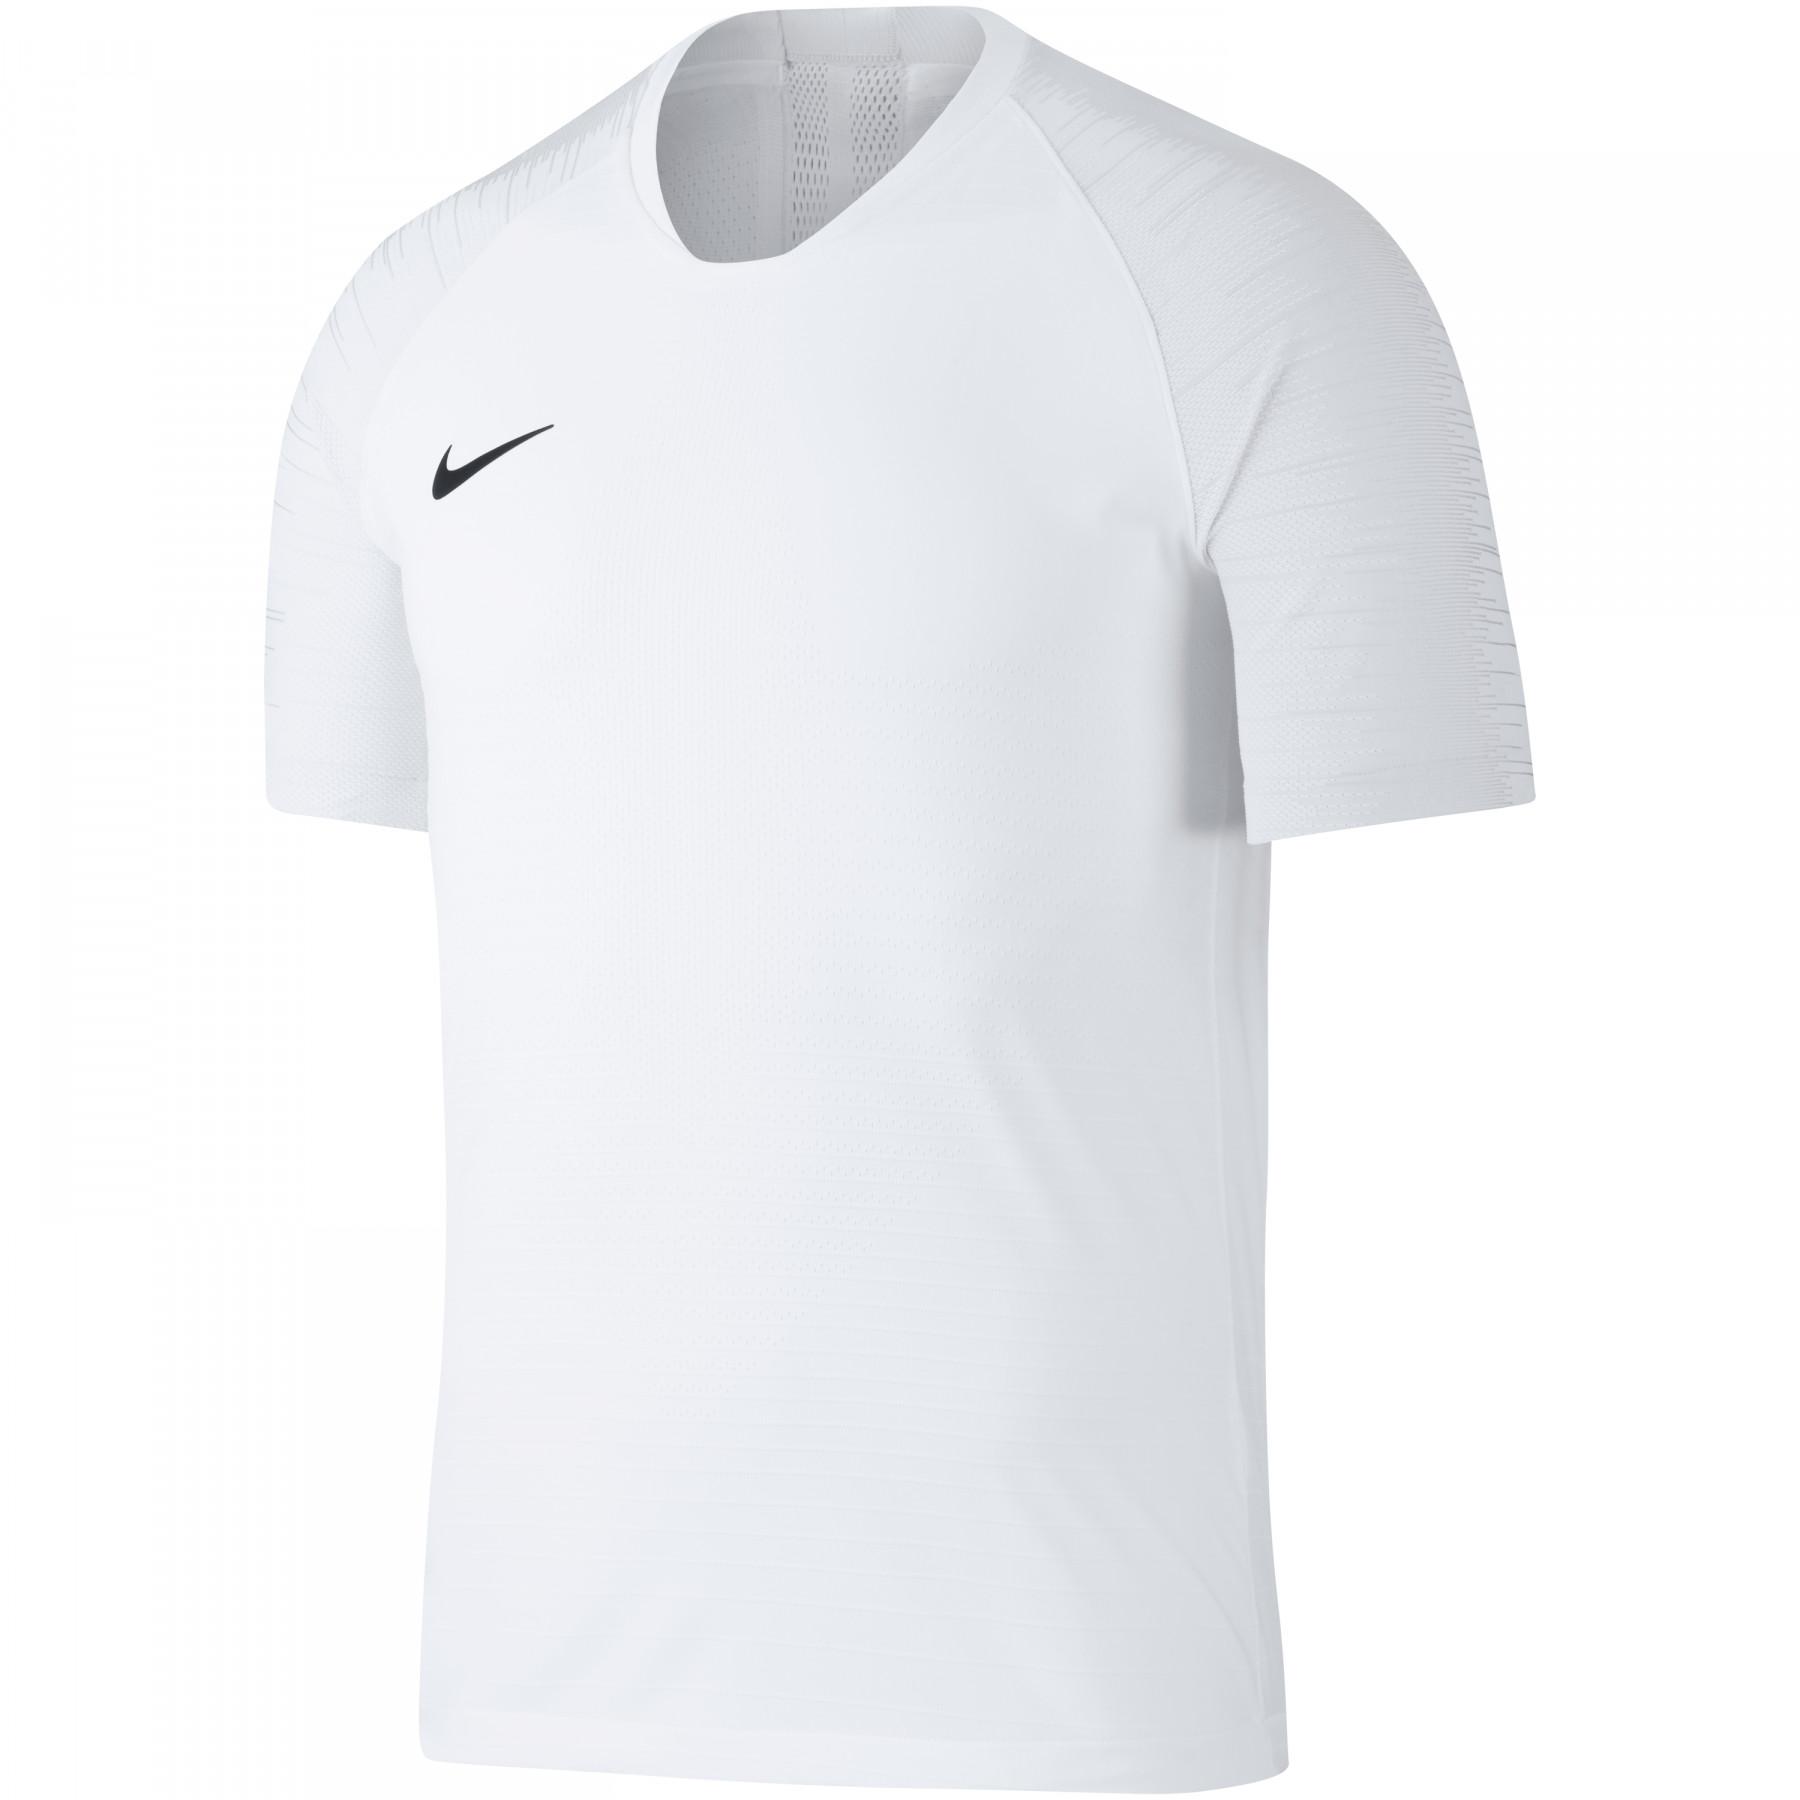 Camiseta Nike VaporKnit II